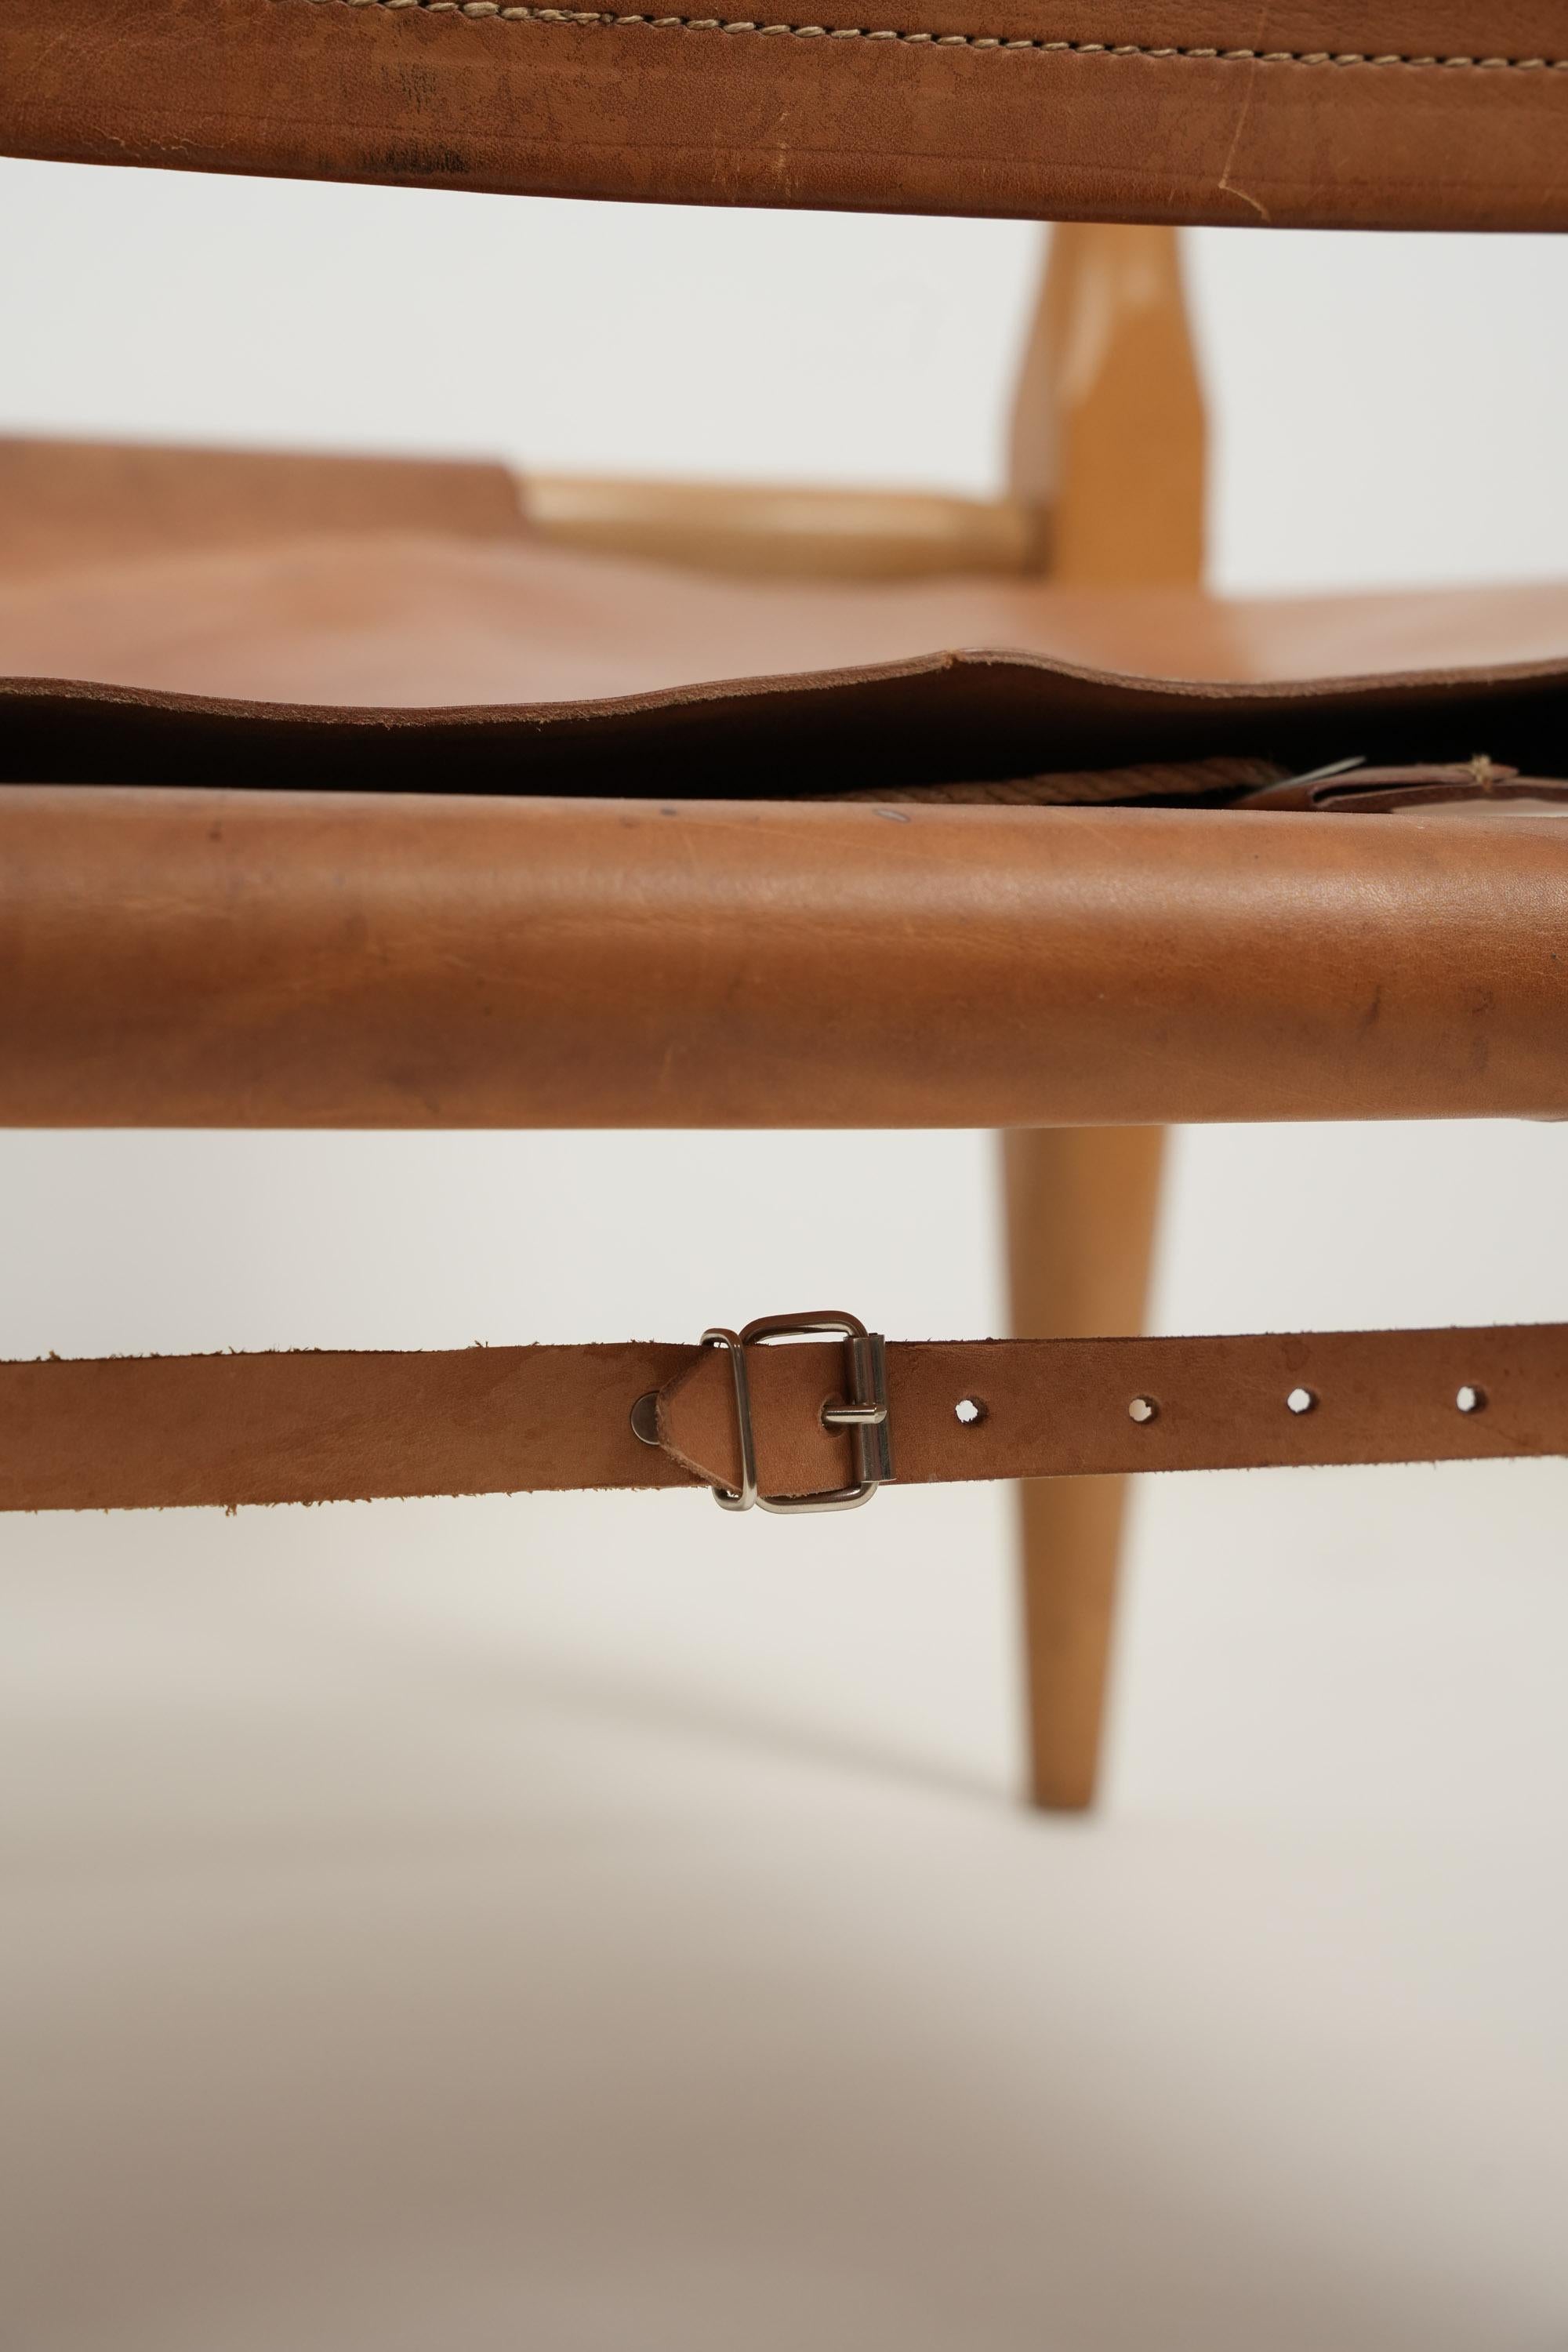 Wilhelm Kienzle Leather Safari Chair 1950s For Sale 2